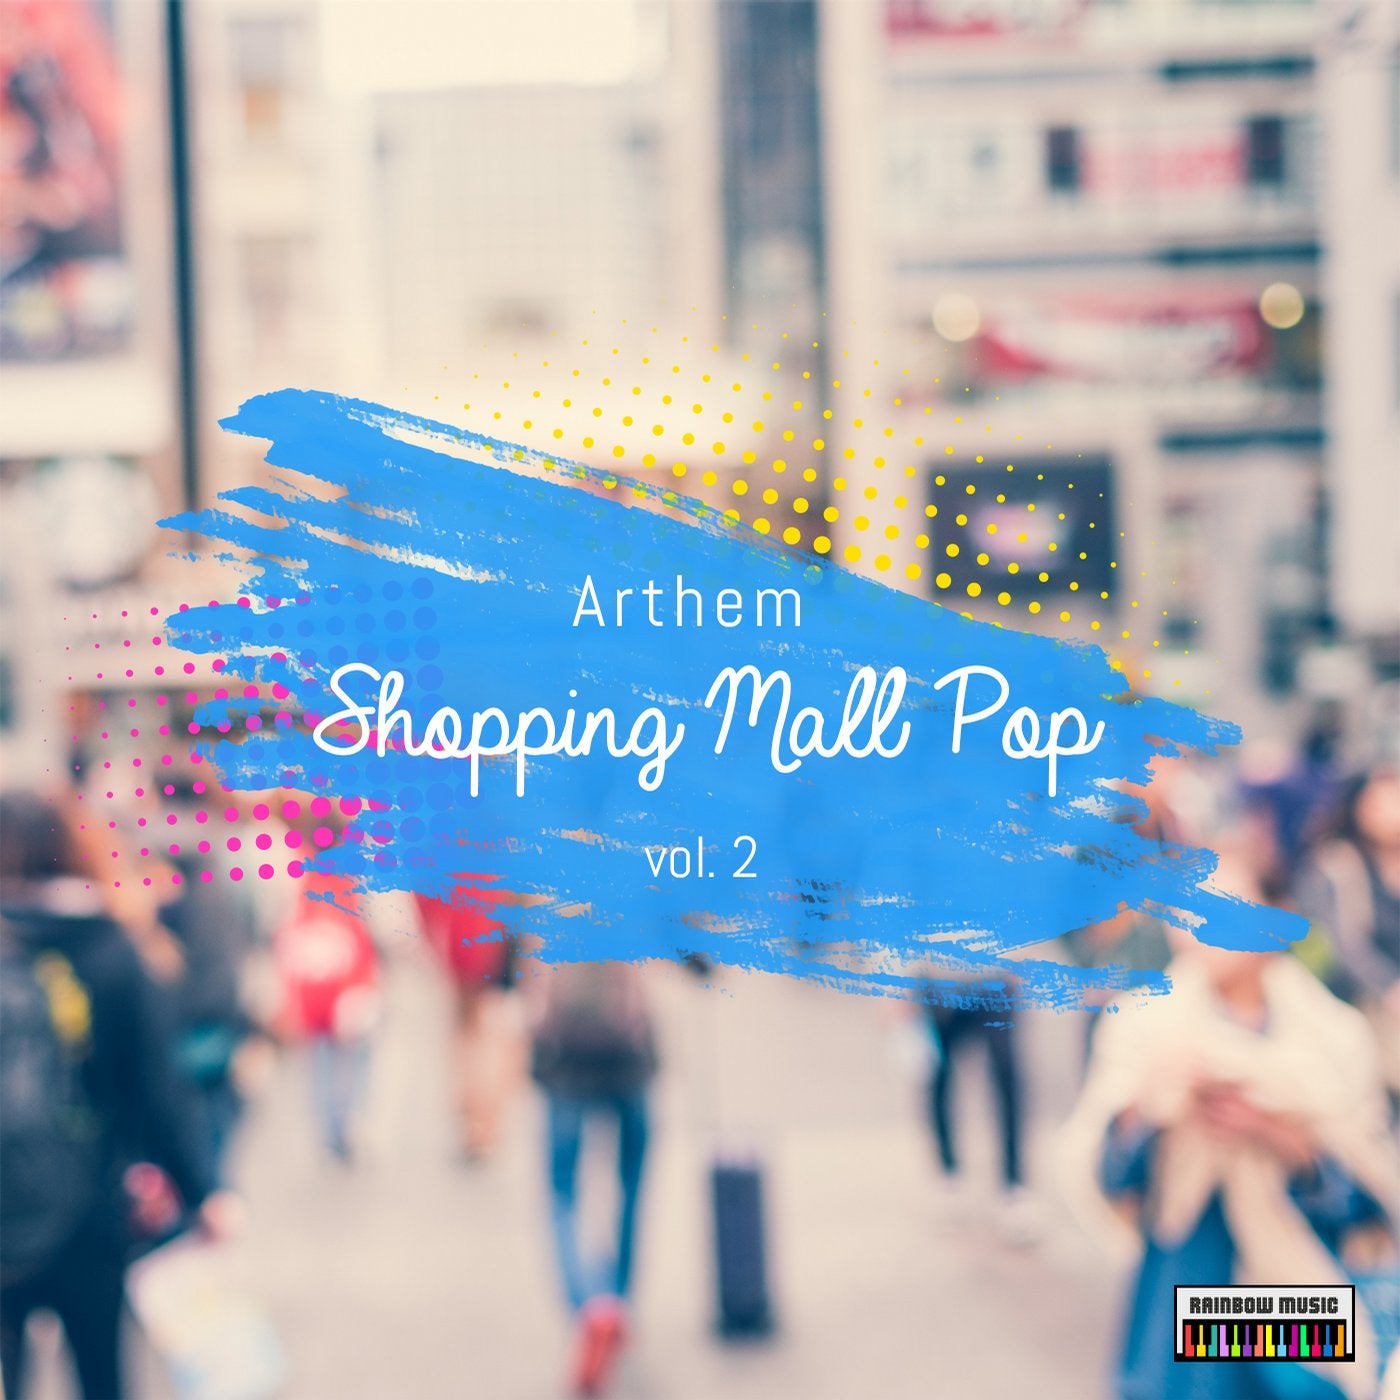 Shopping Mall Pop Vol. 2